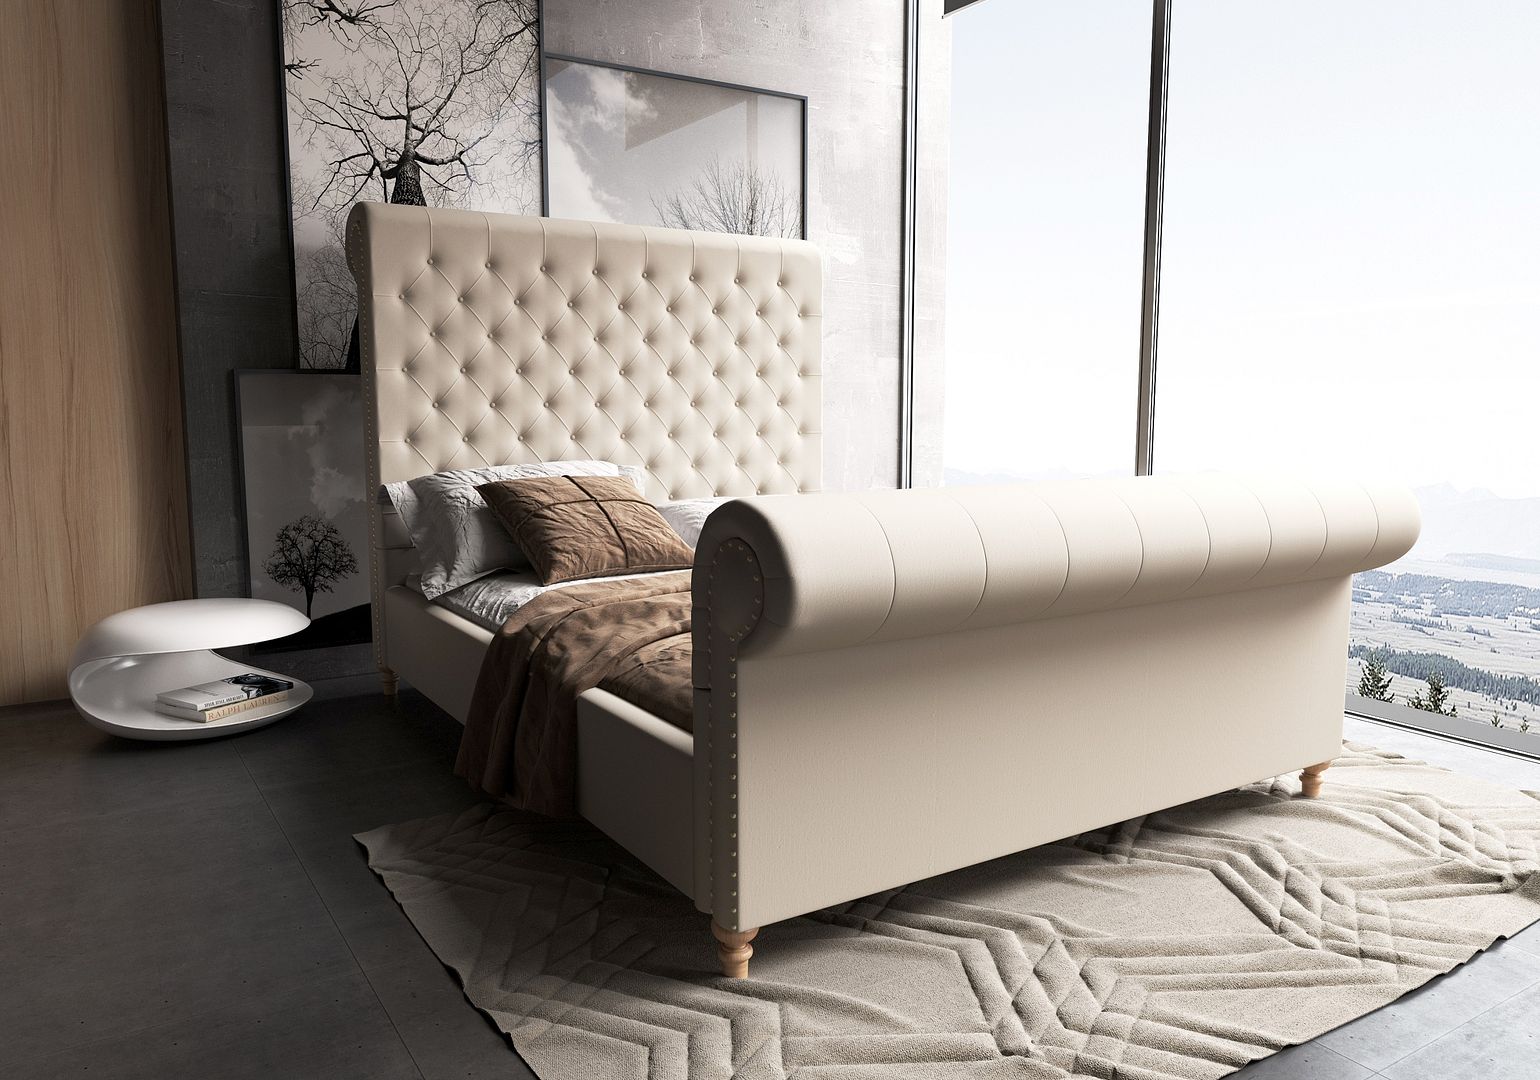 Empire Fabric Upholstered Platform Bed Frame - East Shore Modern Home Furnishings